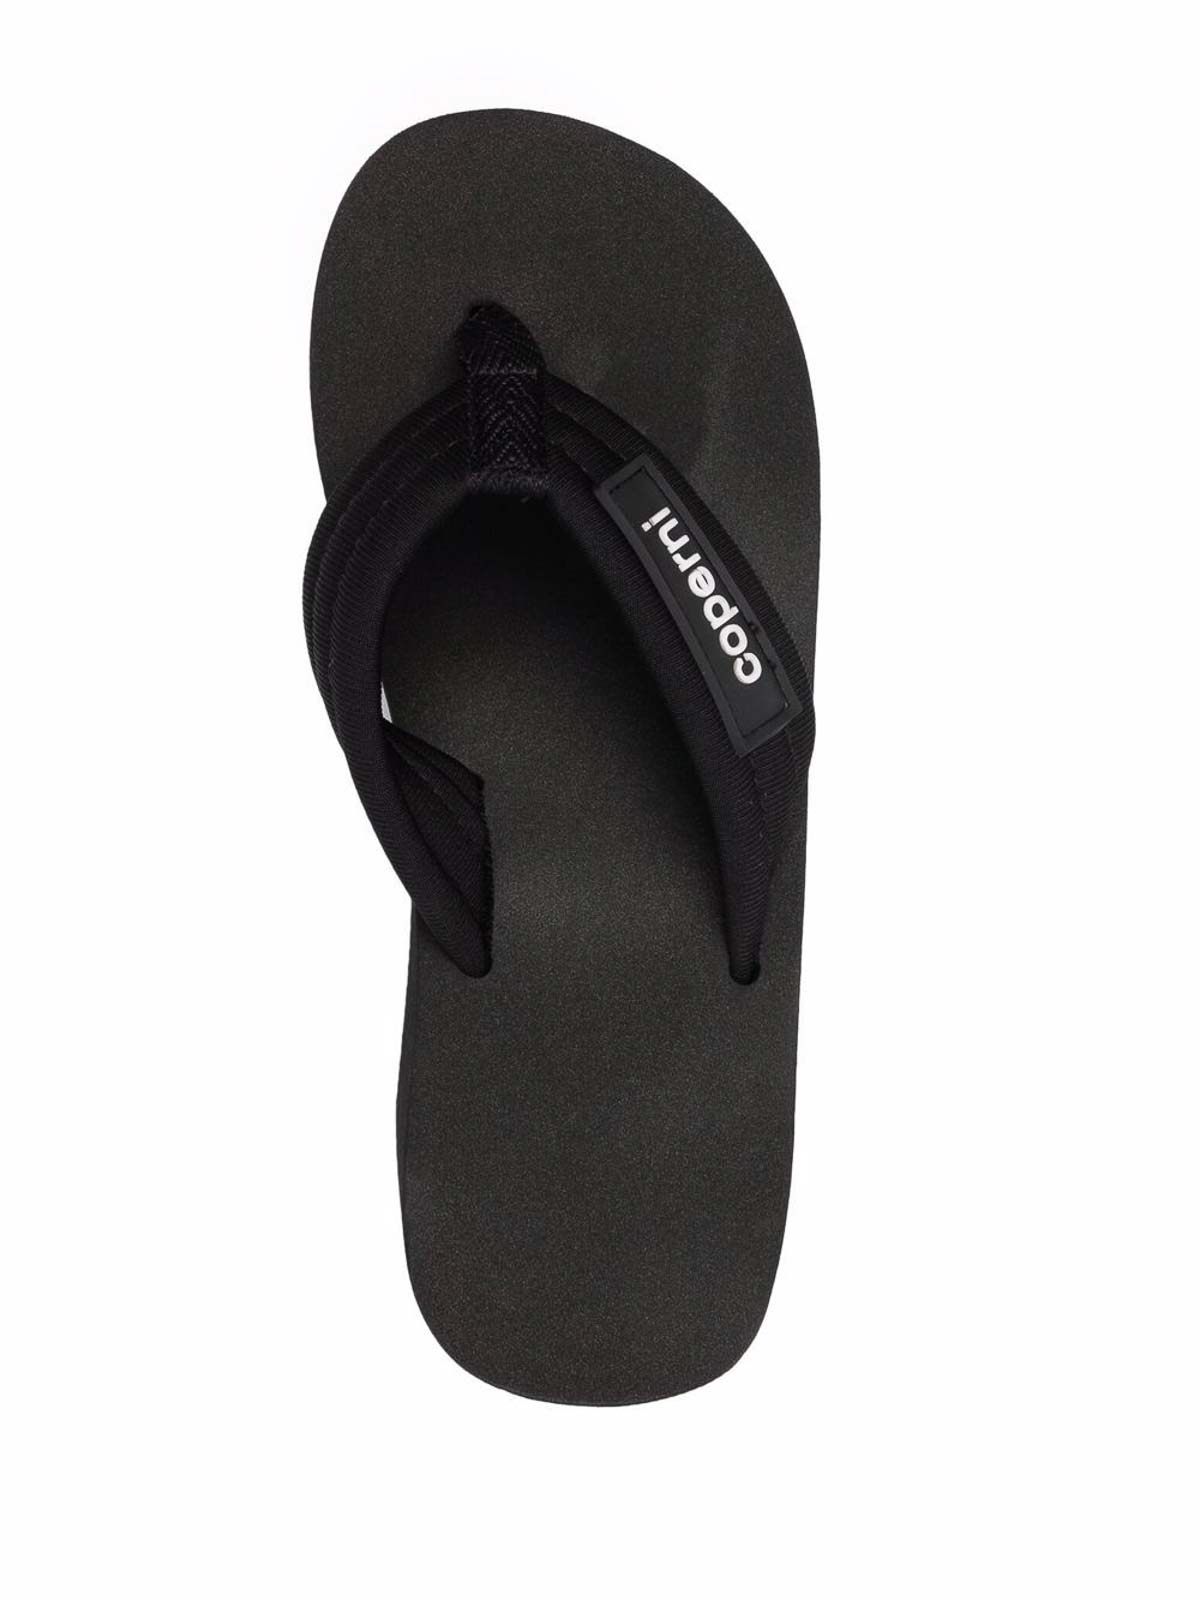 Shop Coperni Branded Wedge Sandals In Negro